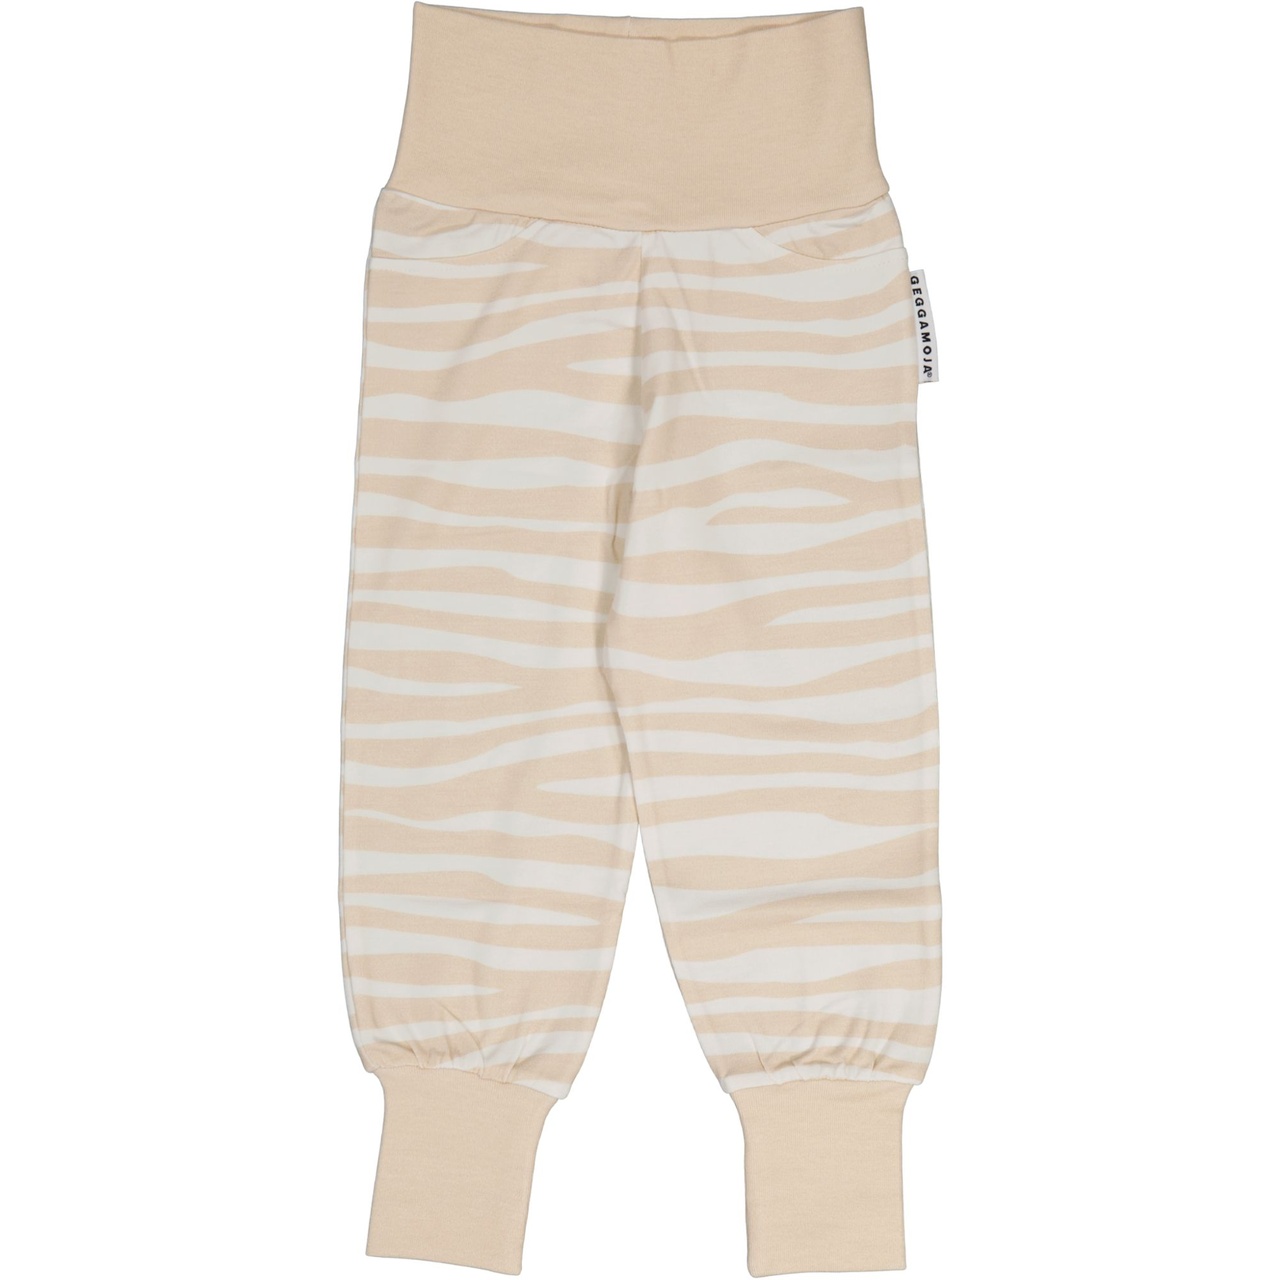 Bamboo Vauvan housut Soft beige zebra  50/56